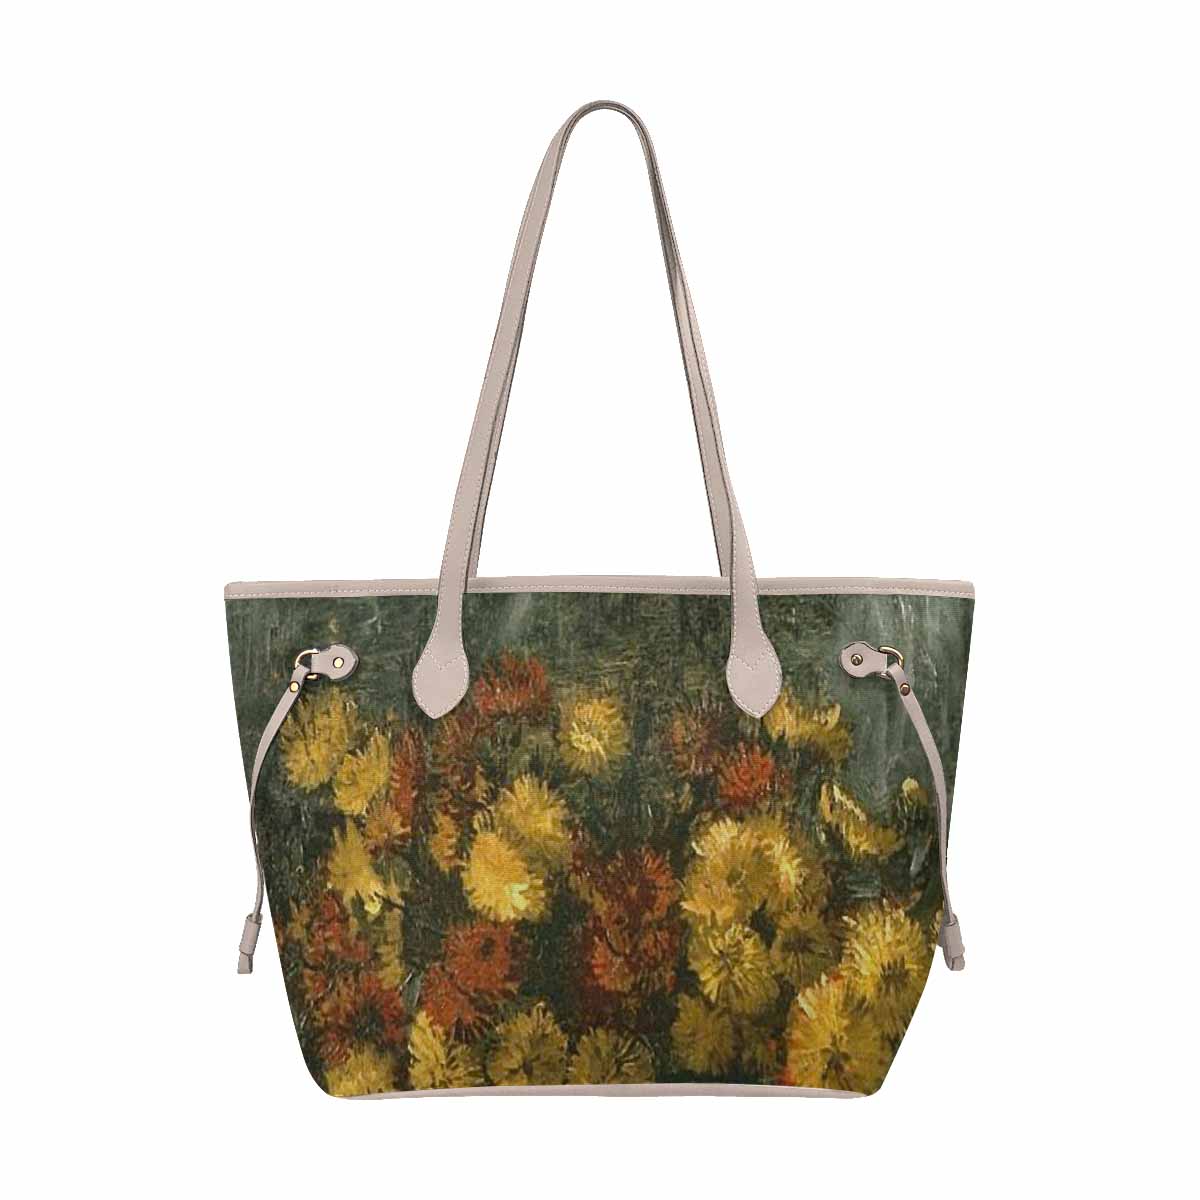 Vintage Floral Handbag, Classic Handbag, Mod 1695361, Design 28 BEIGE/TAN TRIM